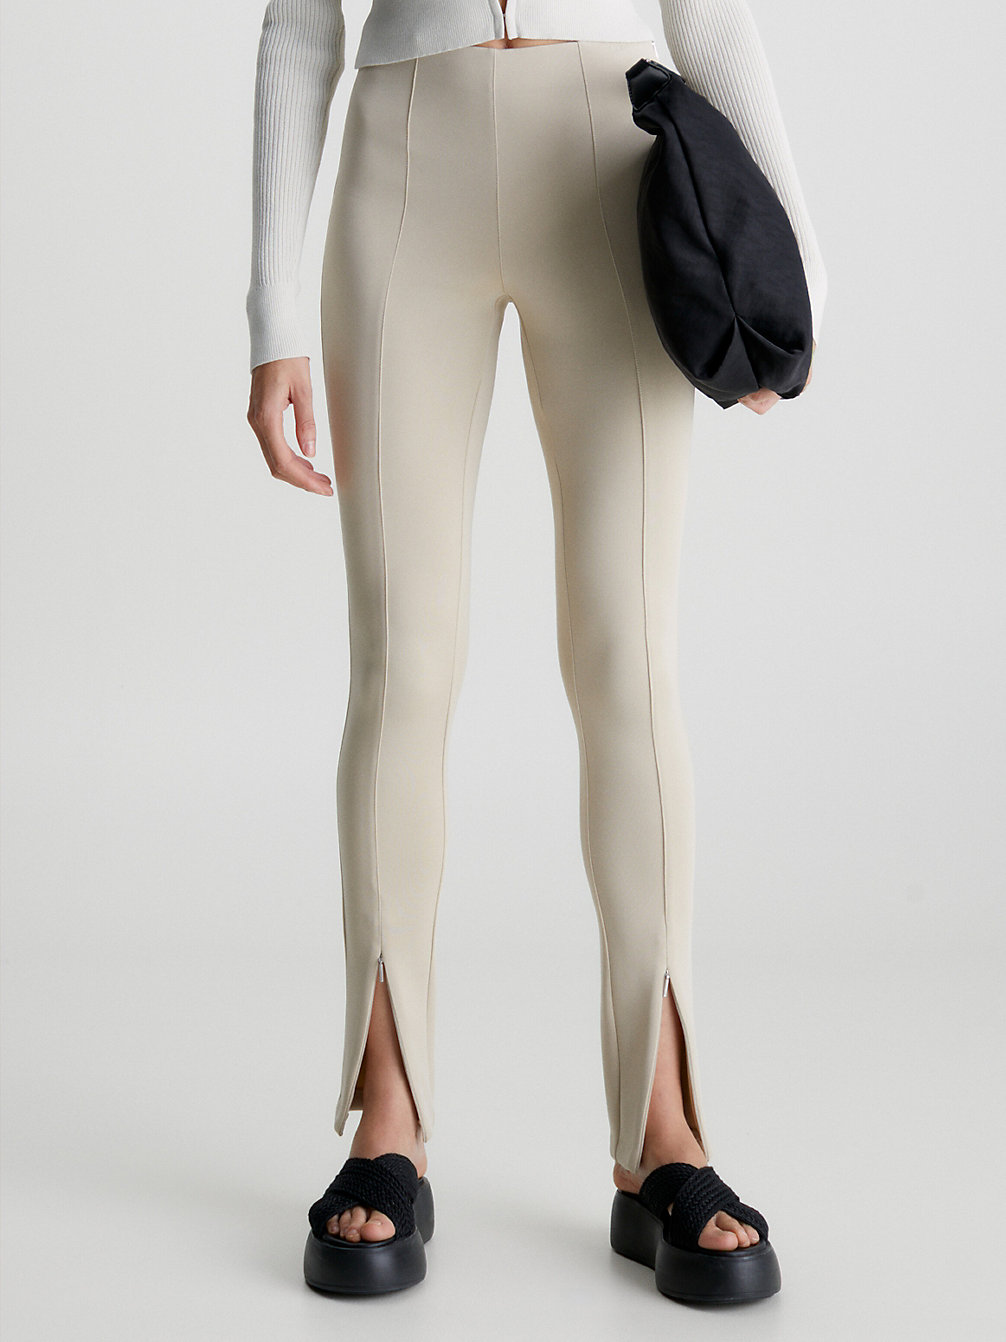 SMOOTH BEIGE Skinny Technical Knit Leggings undefined women Calvin Klein